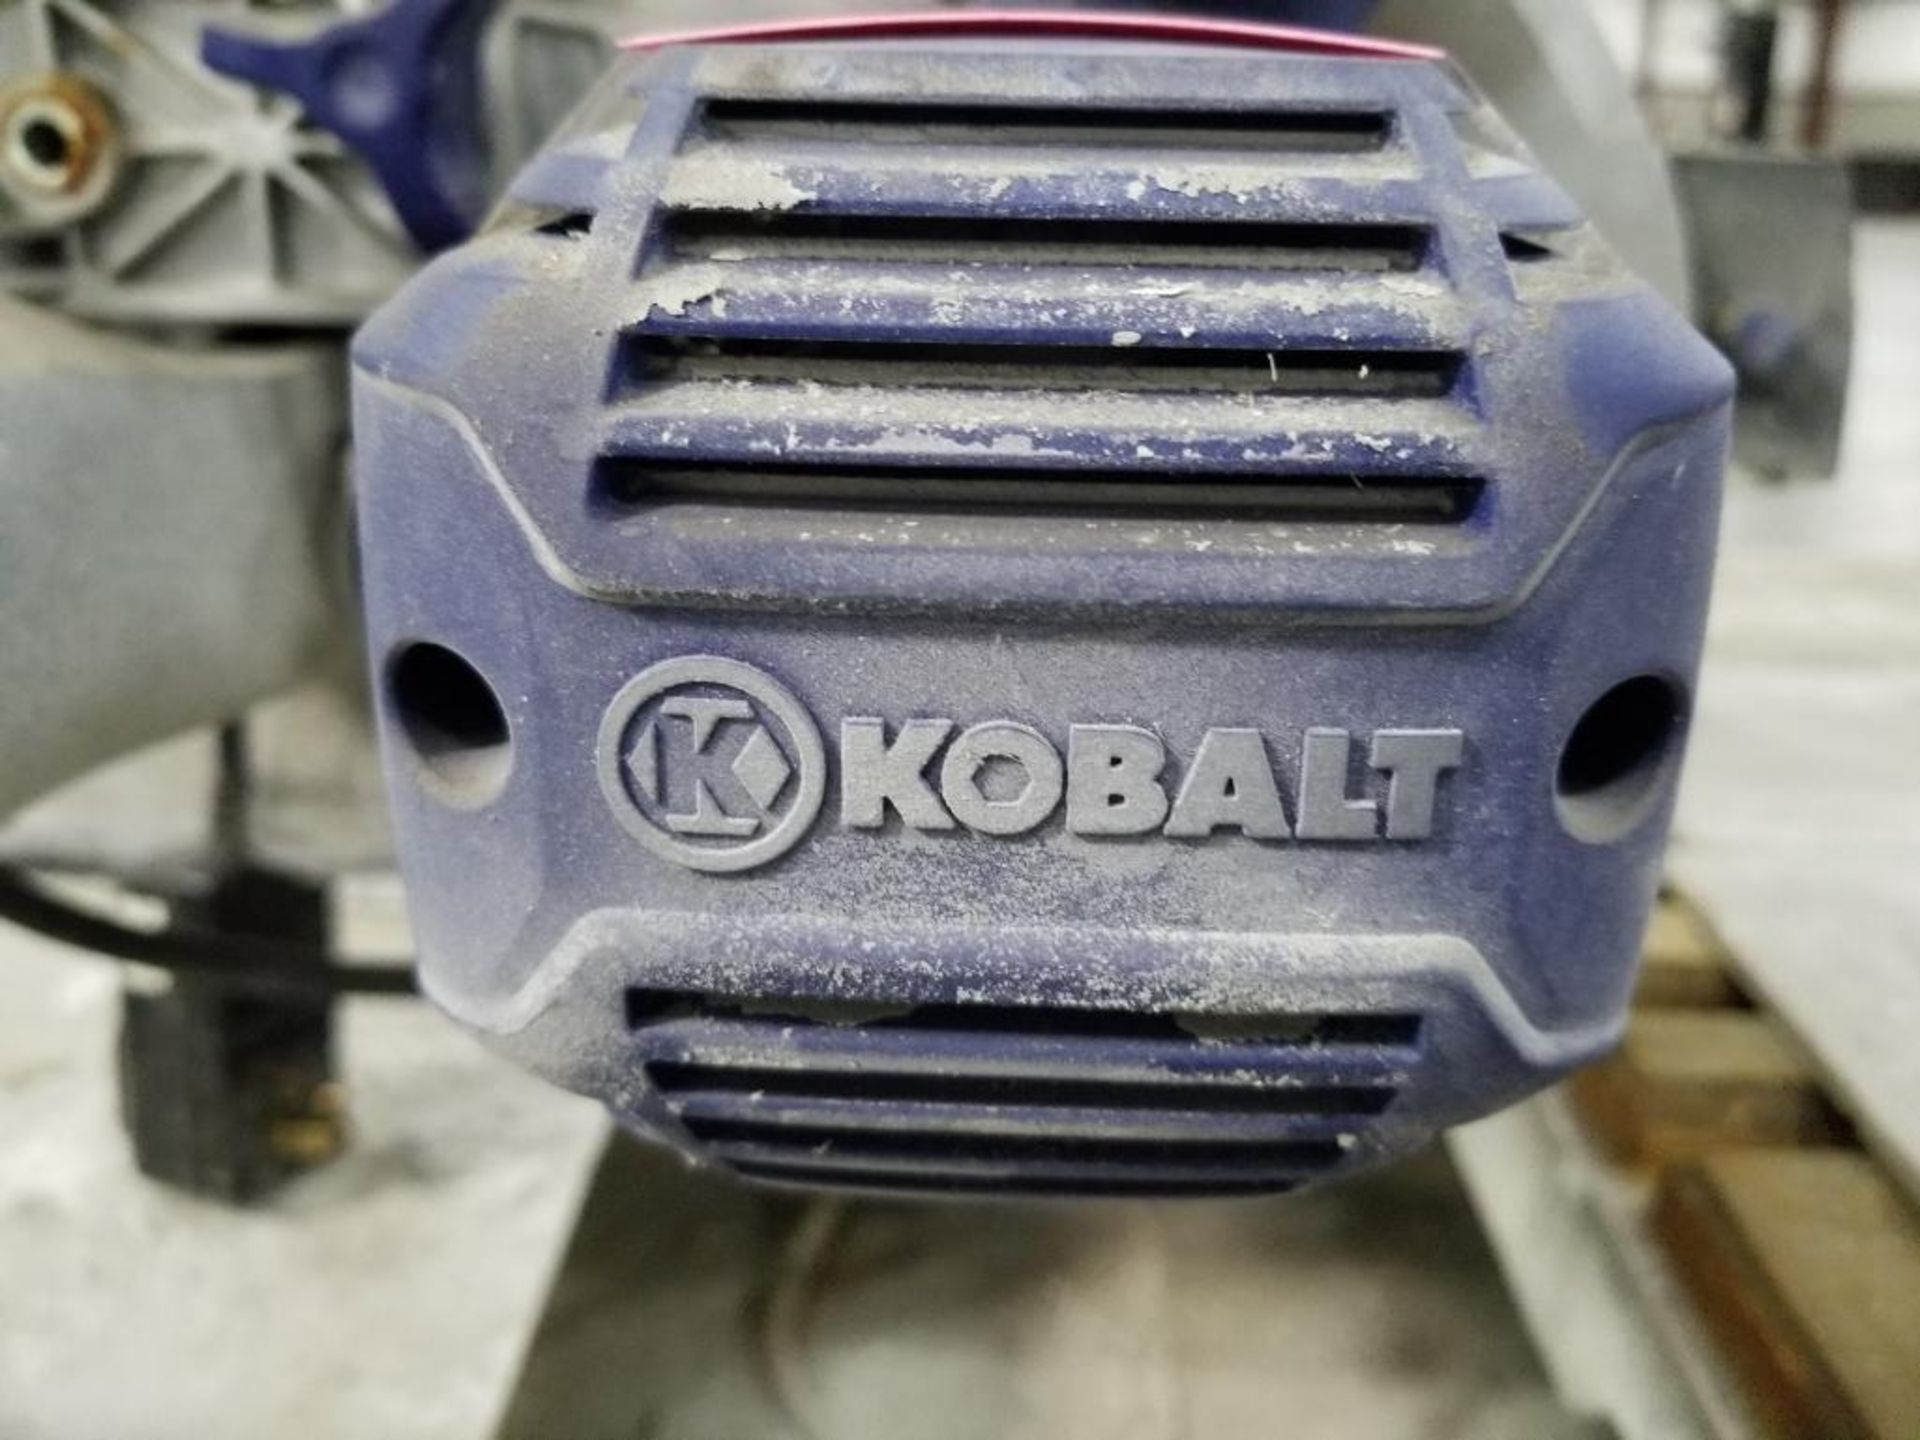 Kobalt tile saw. - Image 5 of 18